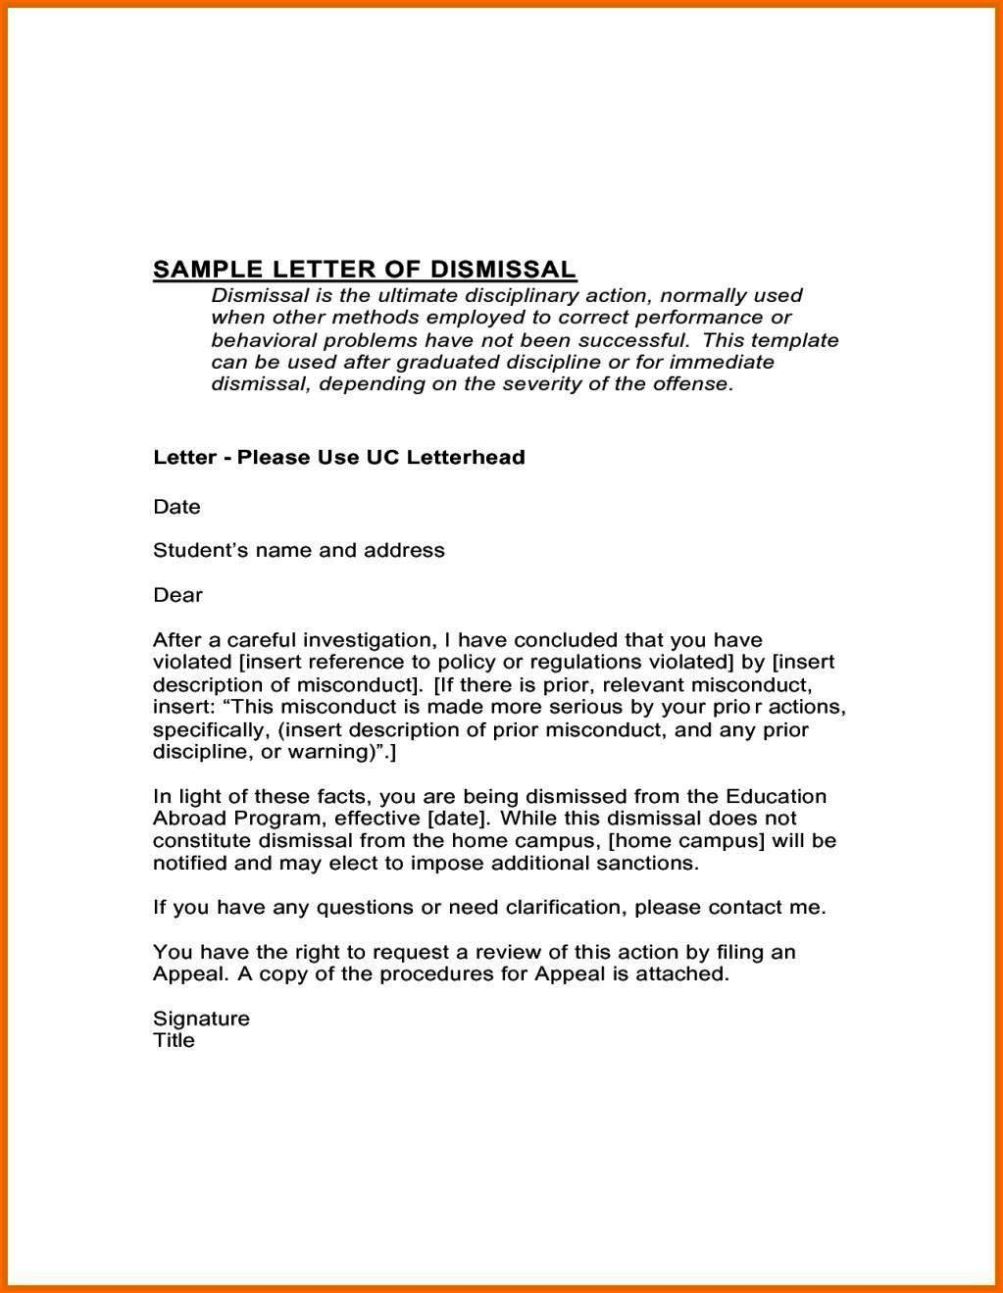 University Suspension Appeal Letter SampleTemplatess SampleTemplatess